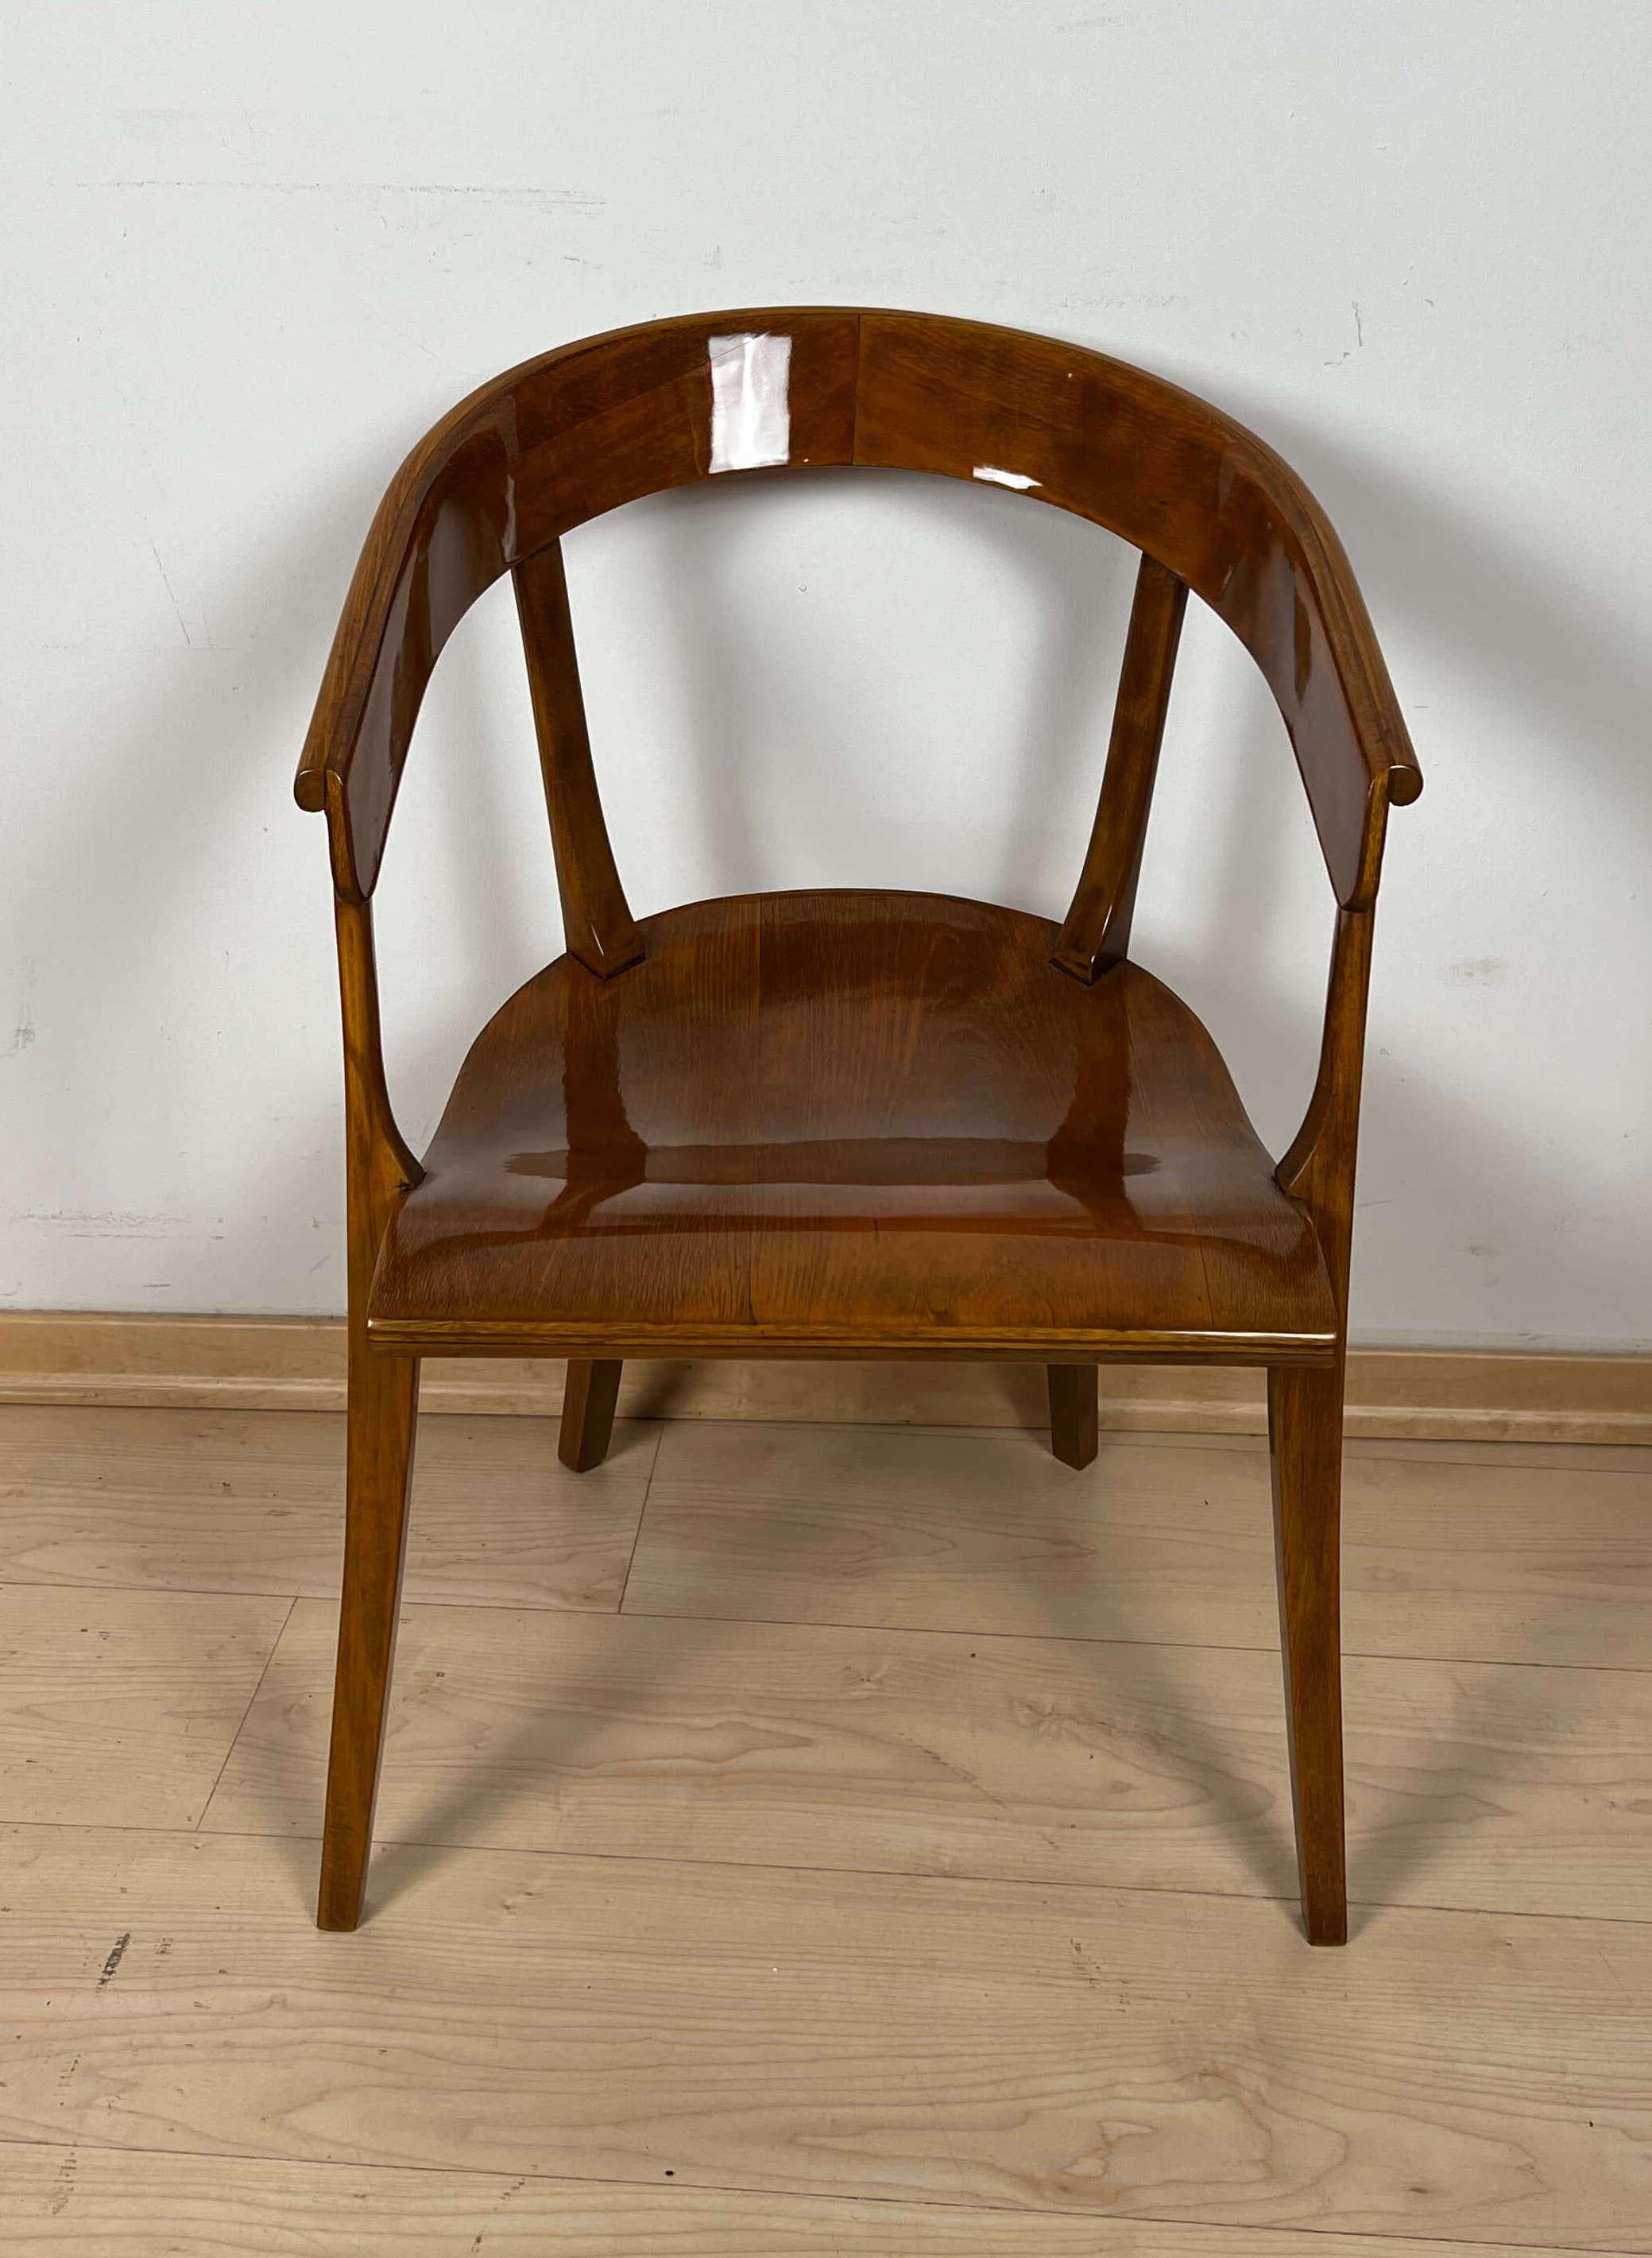 Elegantly curved original bauhaus armchair.

Manufacturer: Rockhausen Waldheim
Design: Ernst Rockhausen for Rockhausen, 1928
Beech frame. Seat and back made of curved plywood
Stamped at the bottom Rockhausen and 